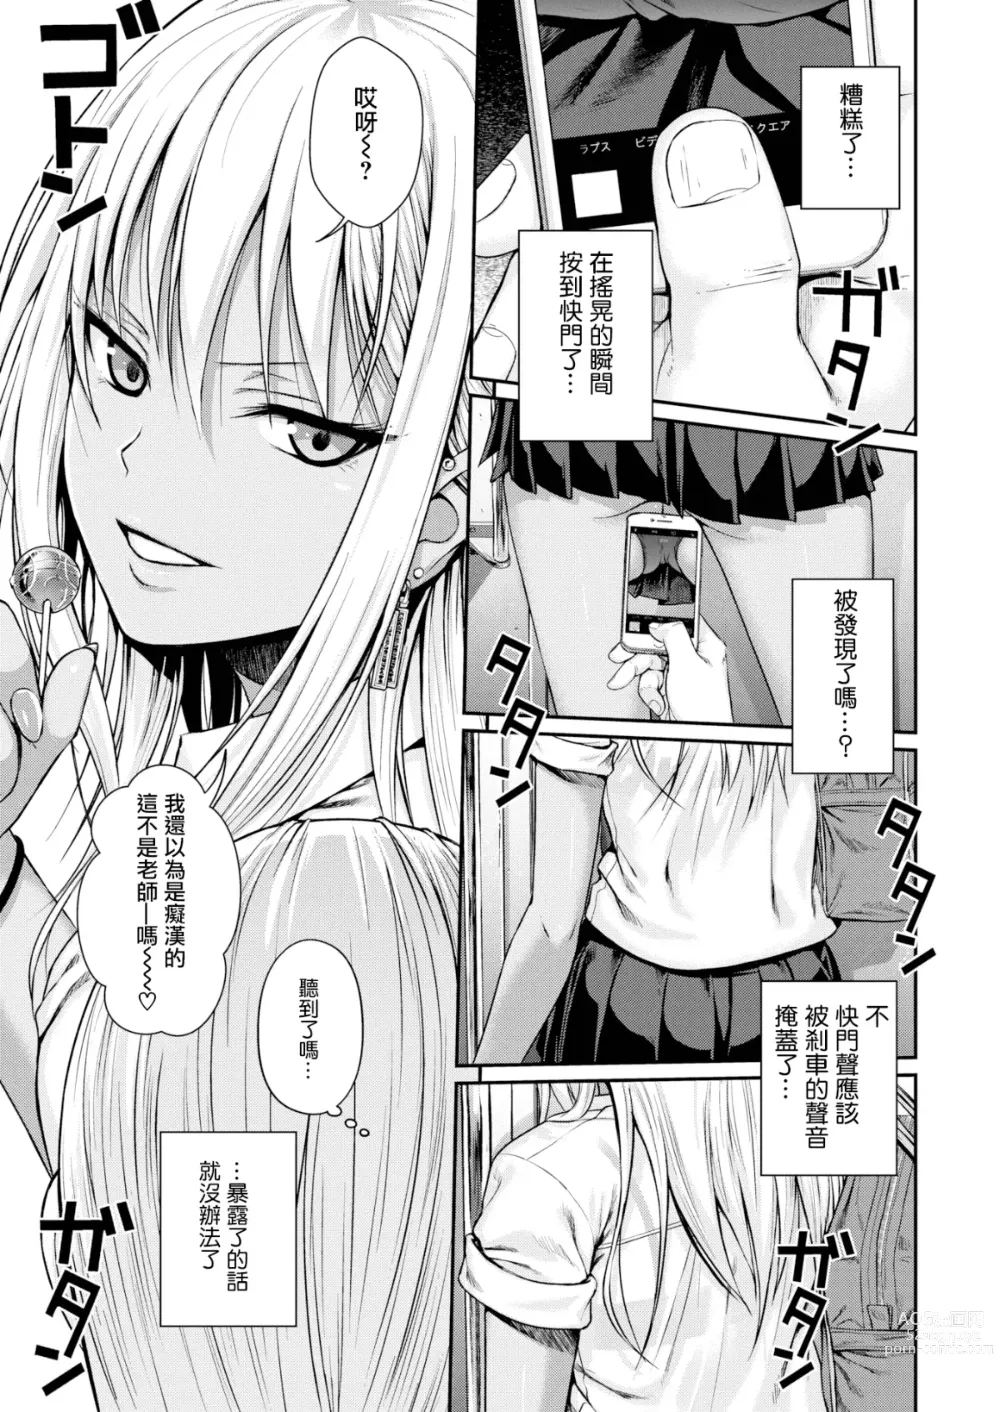 Page 9 of manga プロトタイプティーンズ